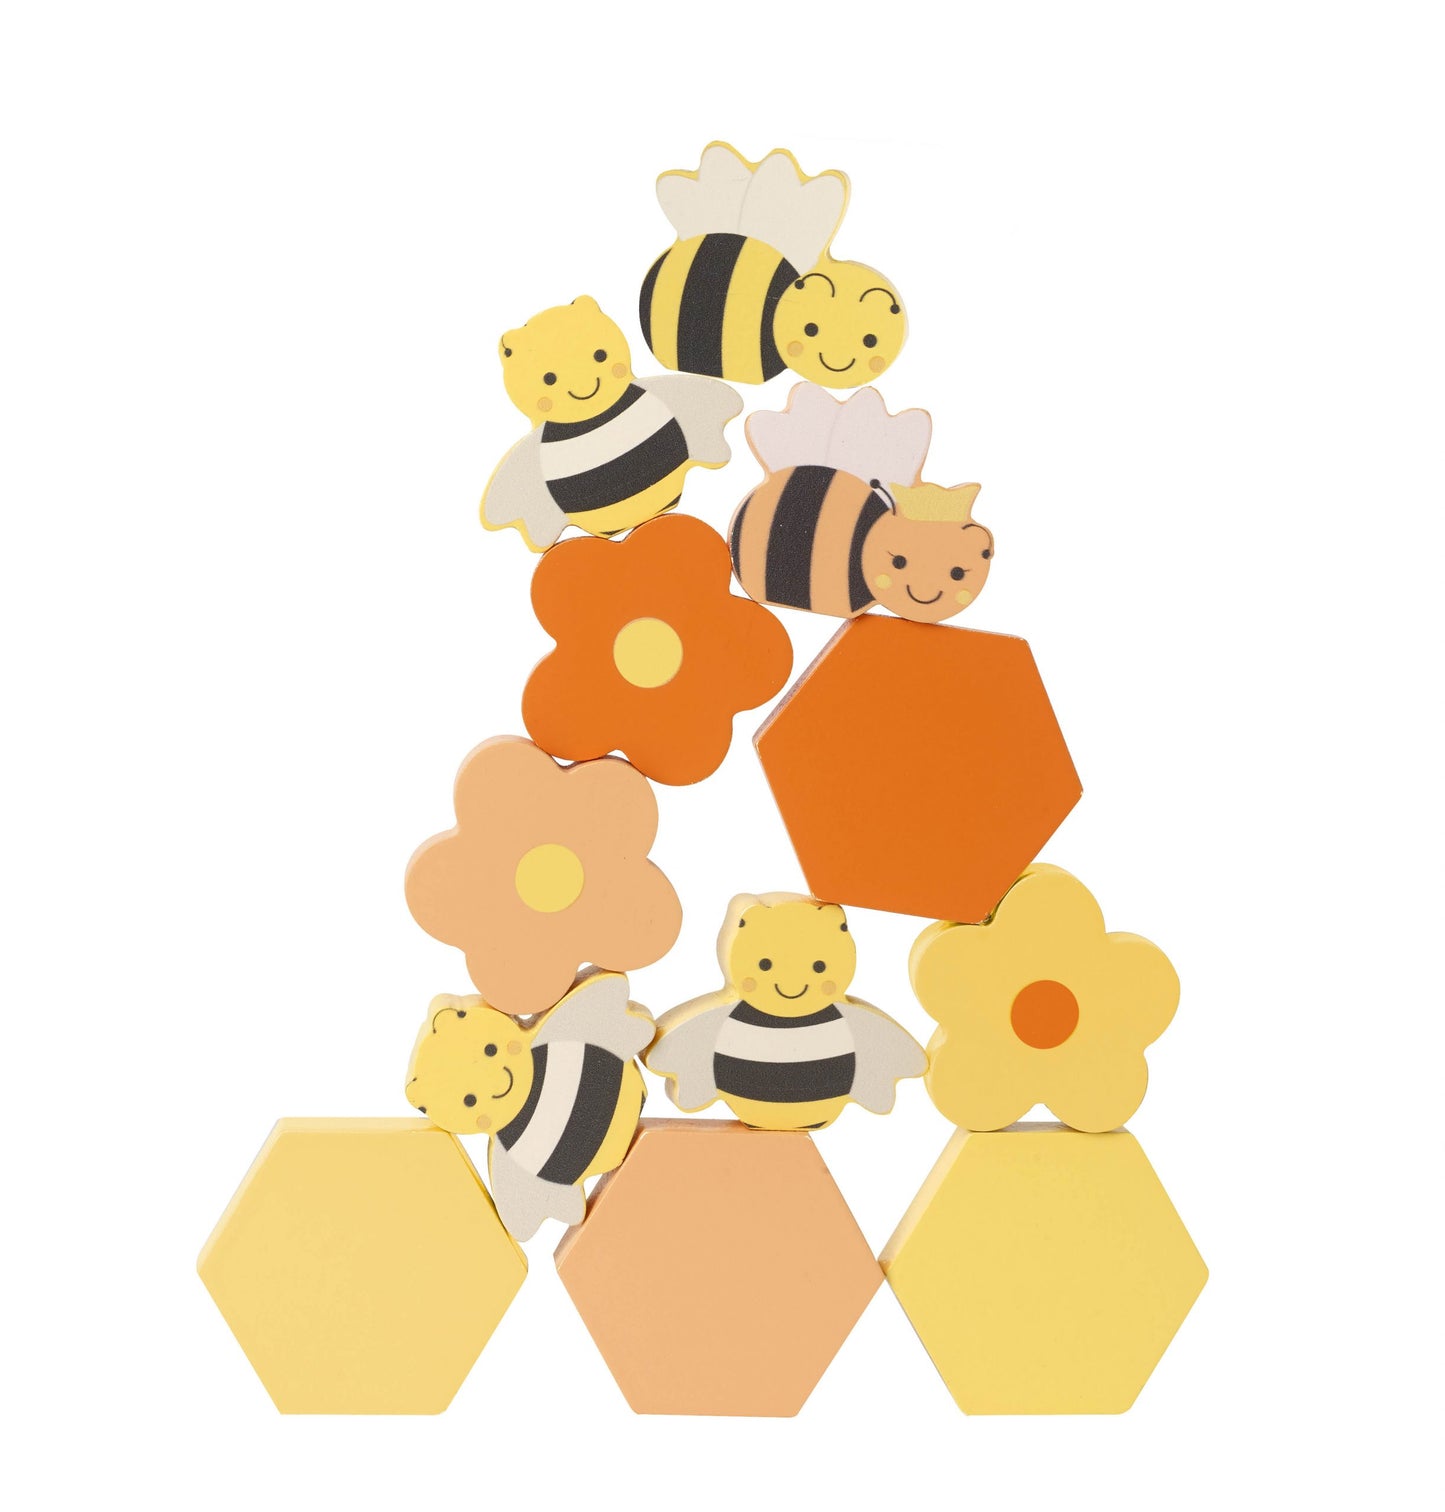 STACKING HONEY BEES_2